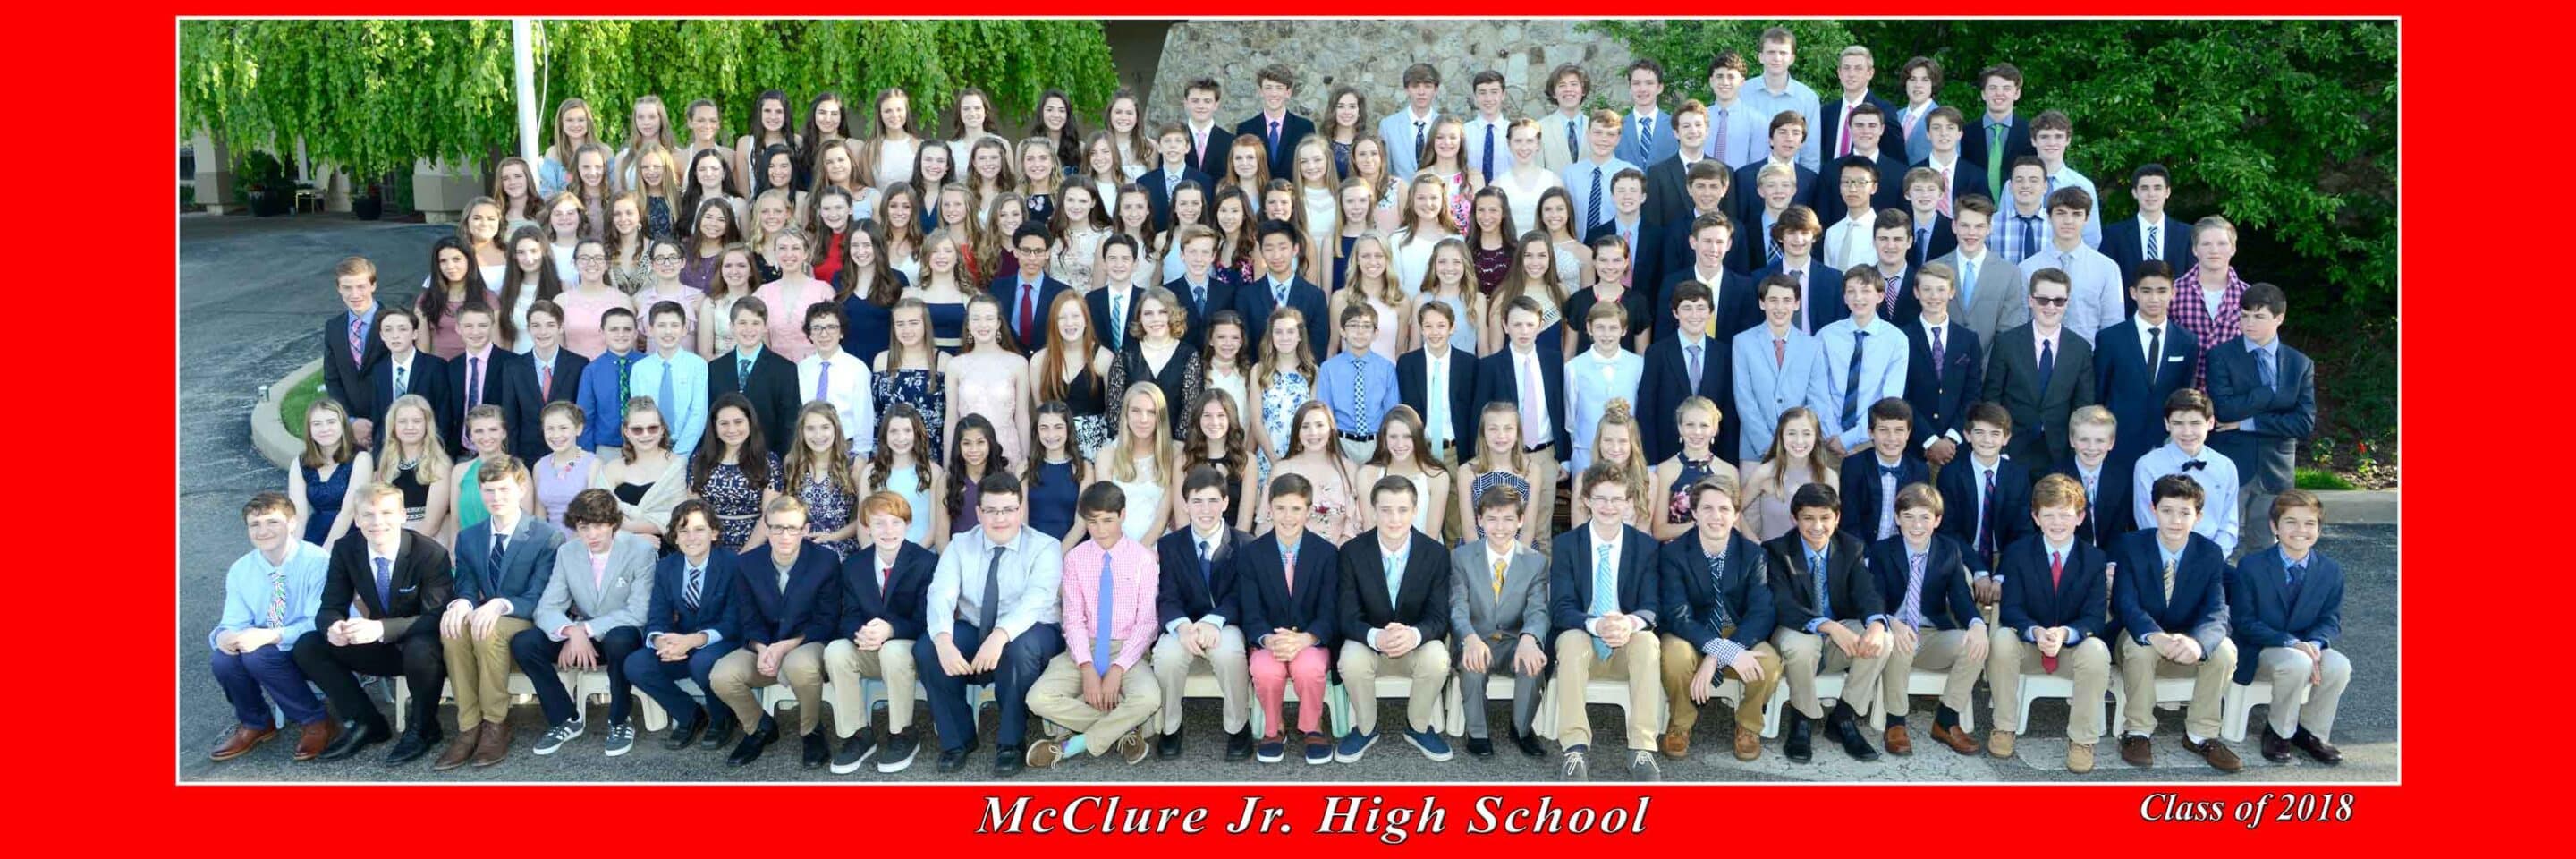 McClure Junior High Panoramic Group Photo by Tom Killoran